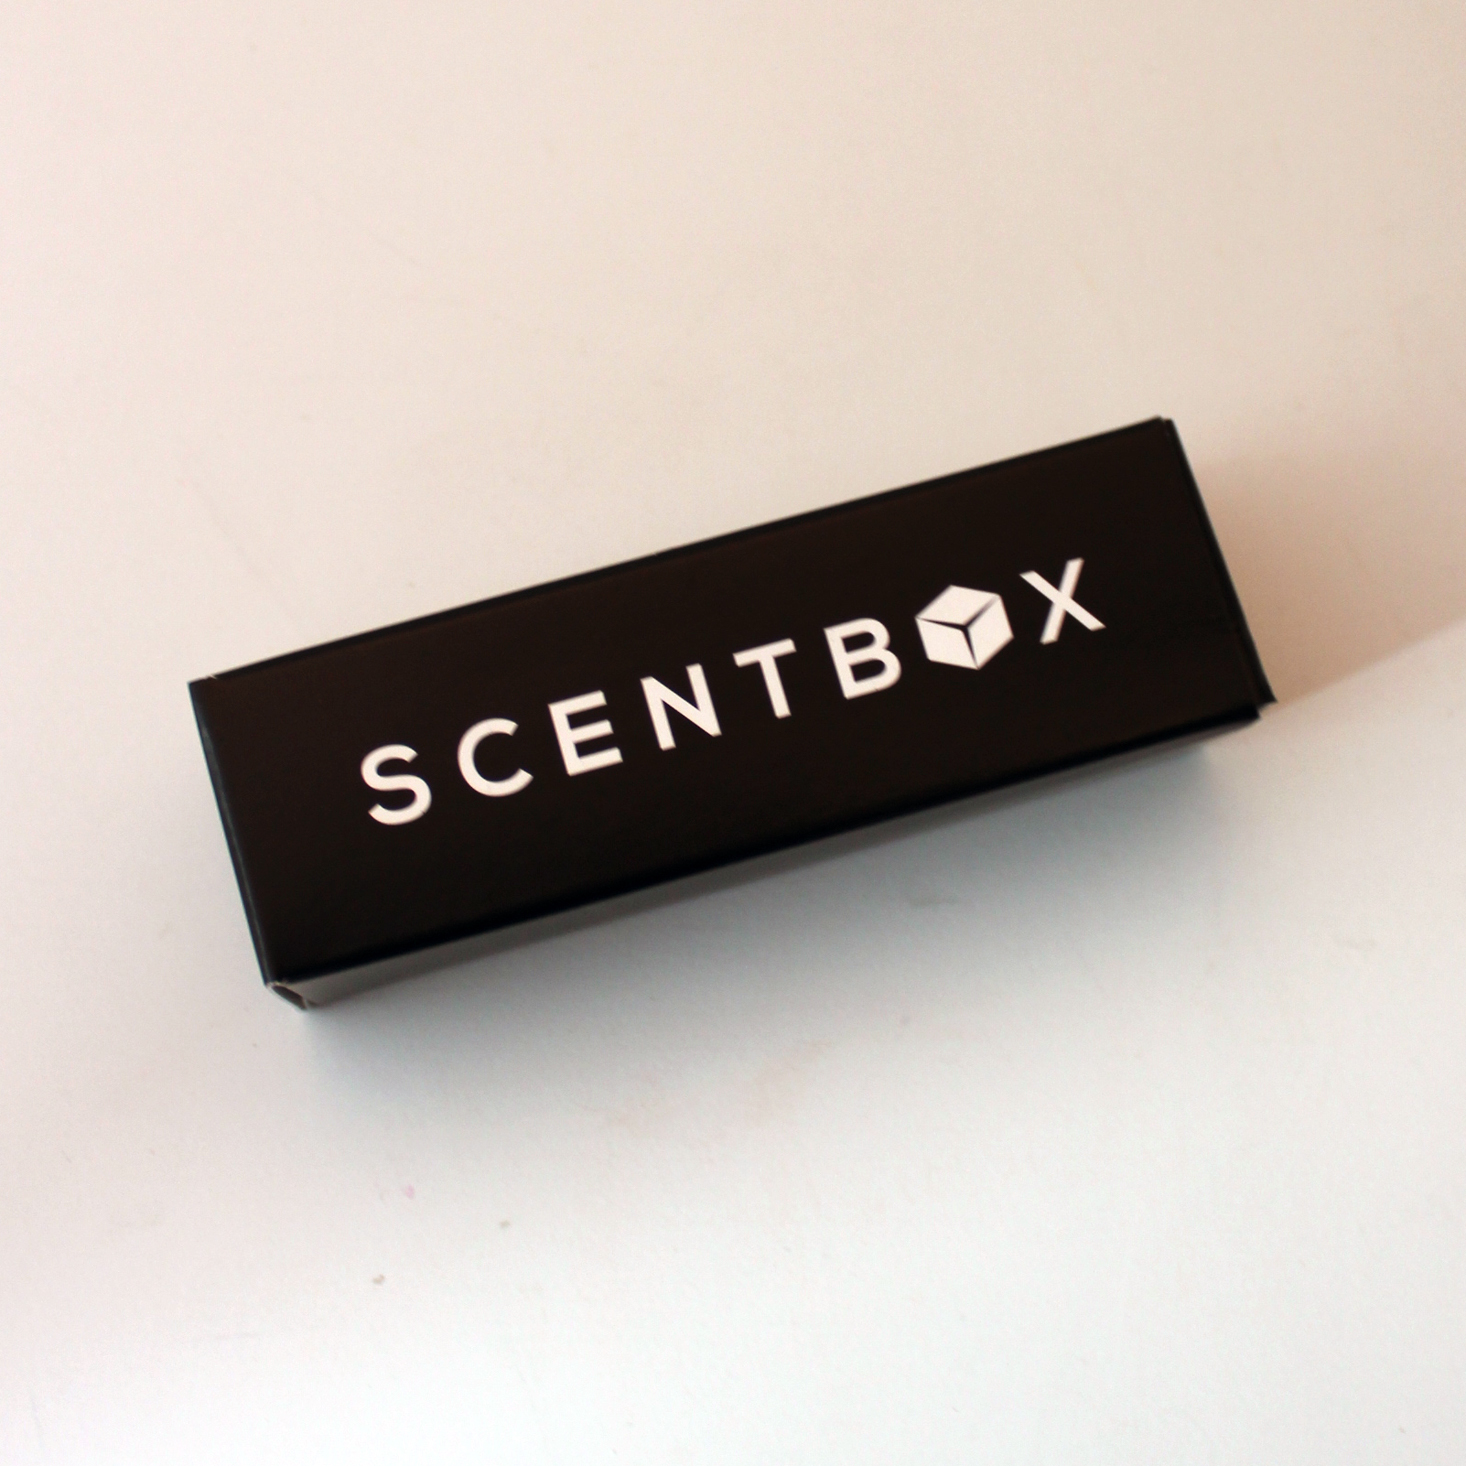 Scent Box November 2019 Black Box